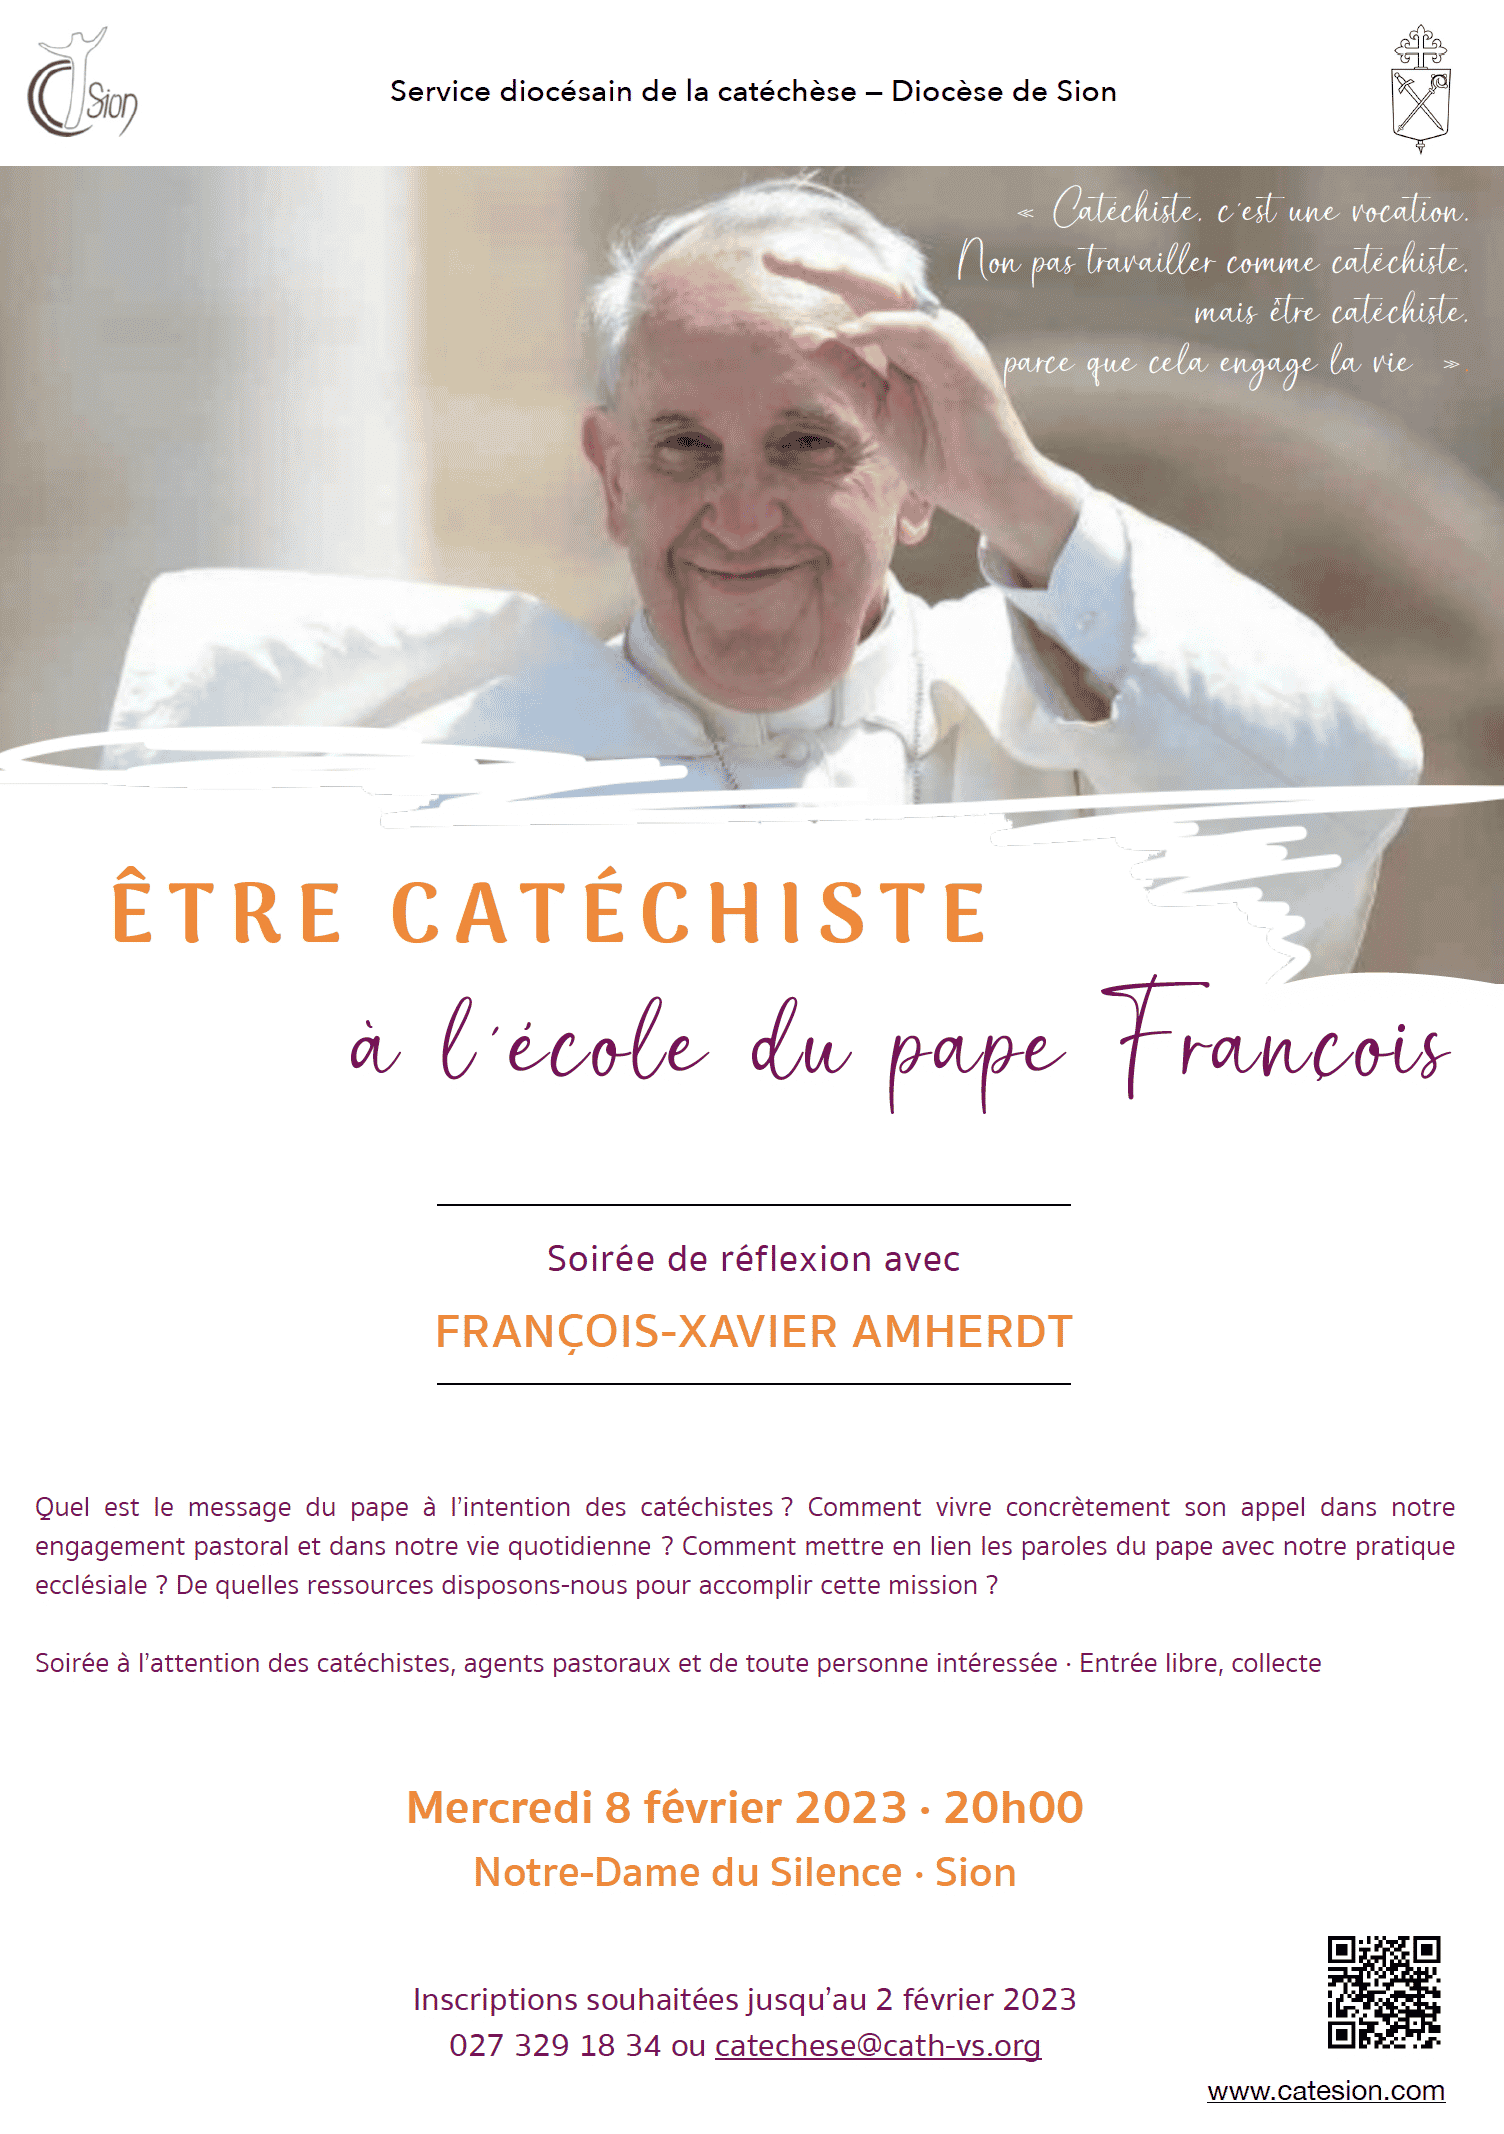 SDC_230208_etre-catechiste_affiche